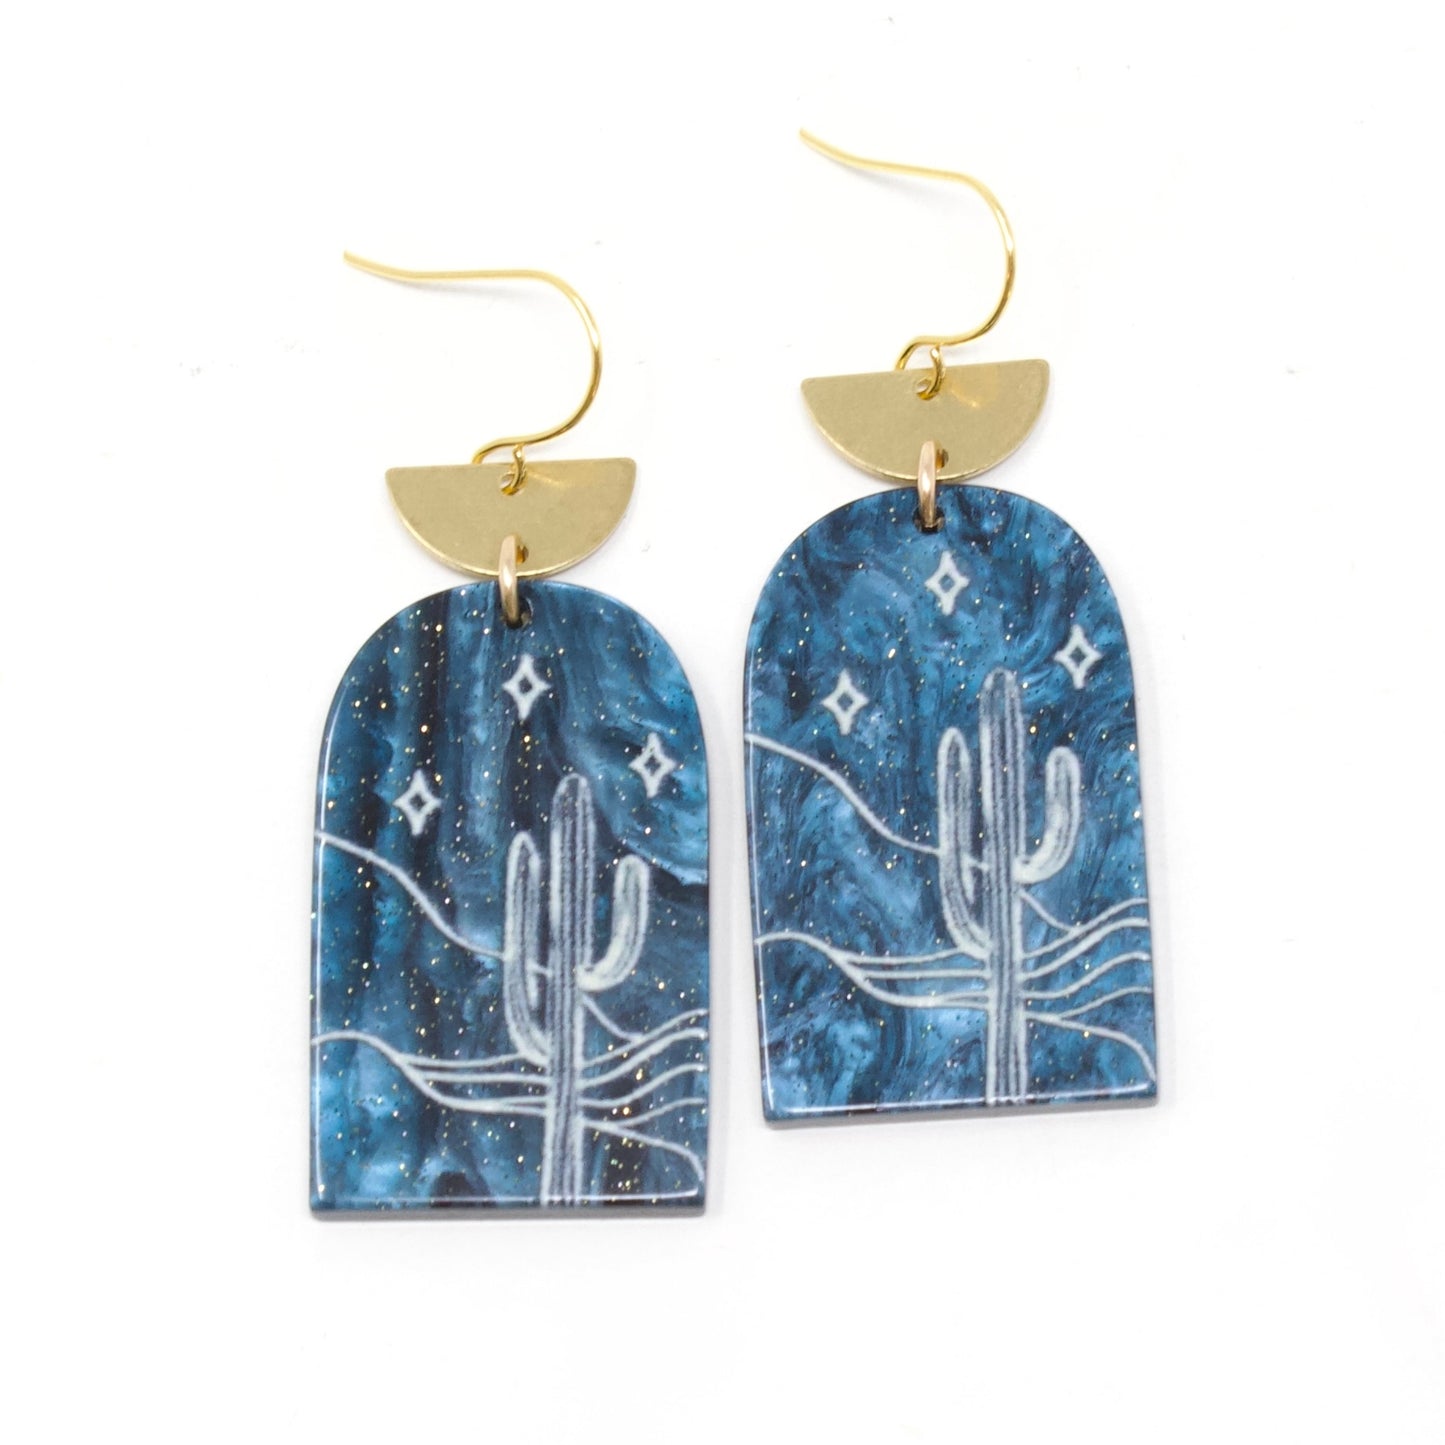 Whimsy Cacti Earrings